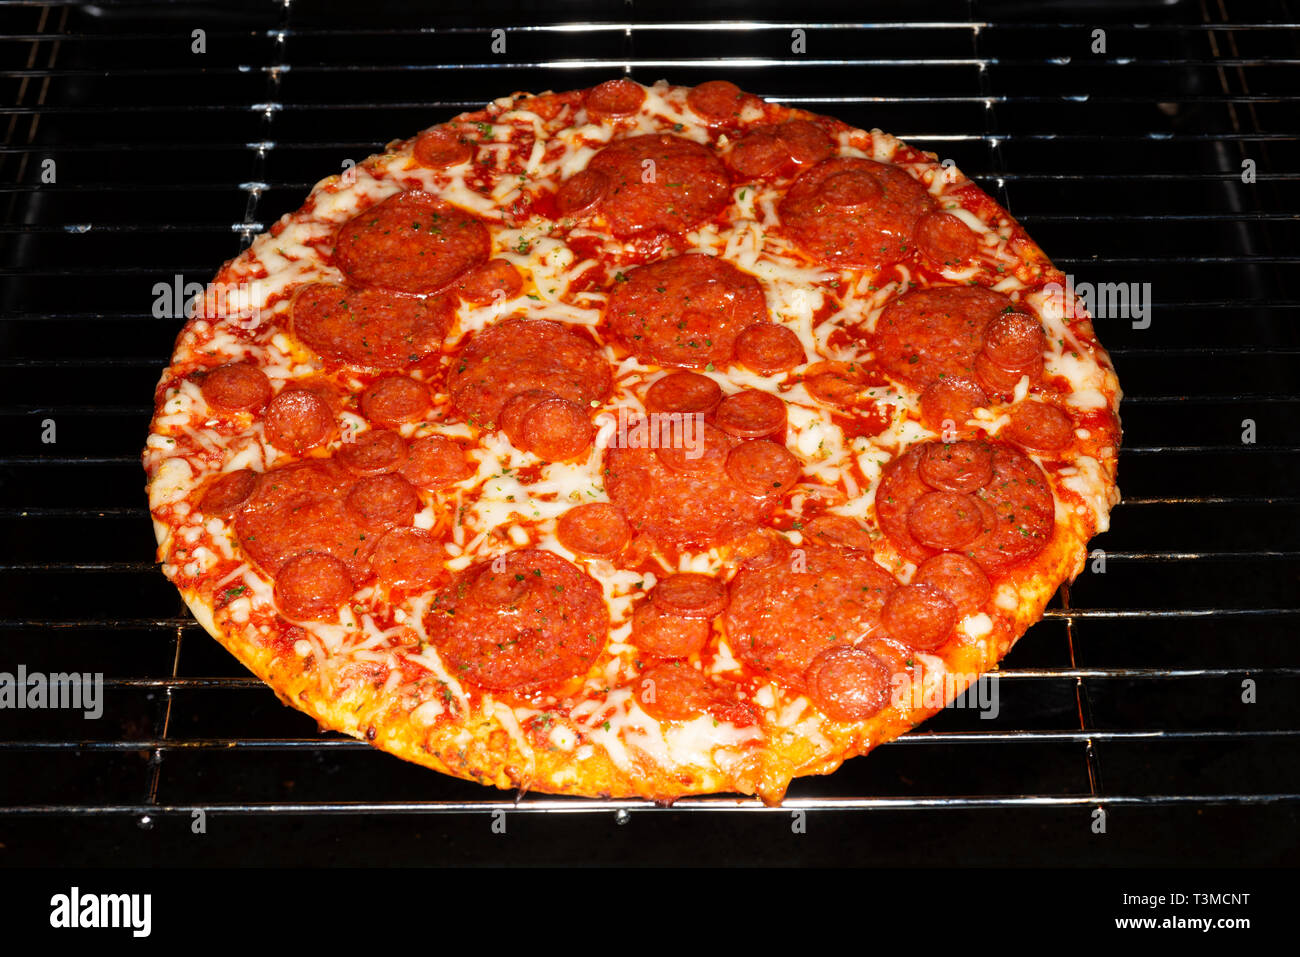 Oven ready frozen pizza Stock Photo